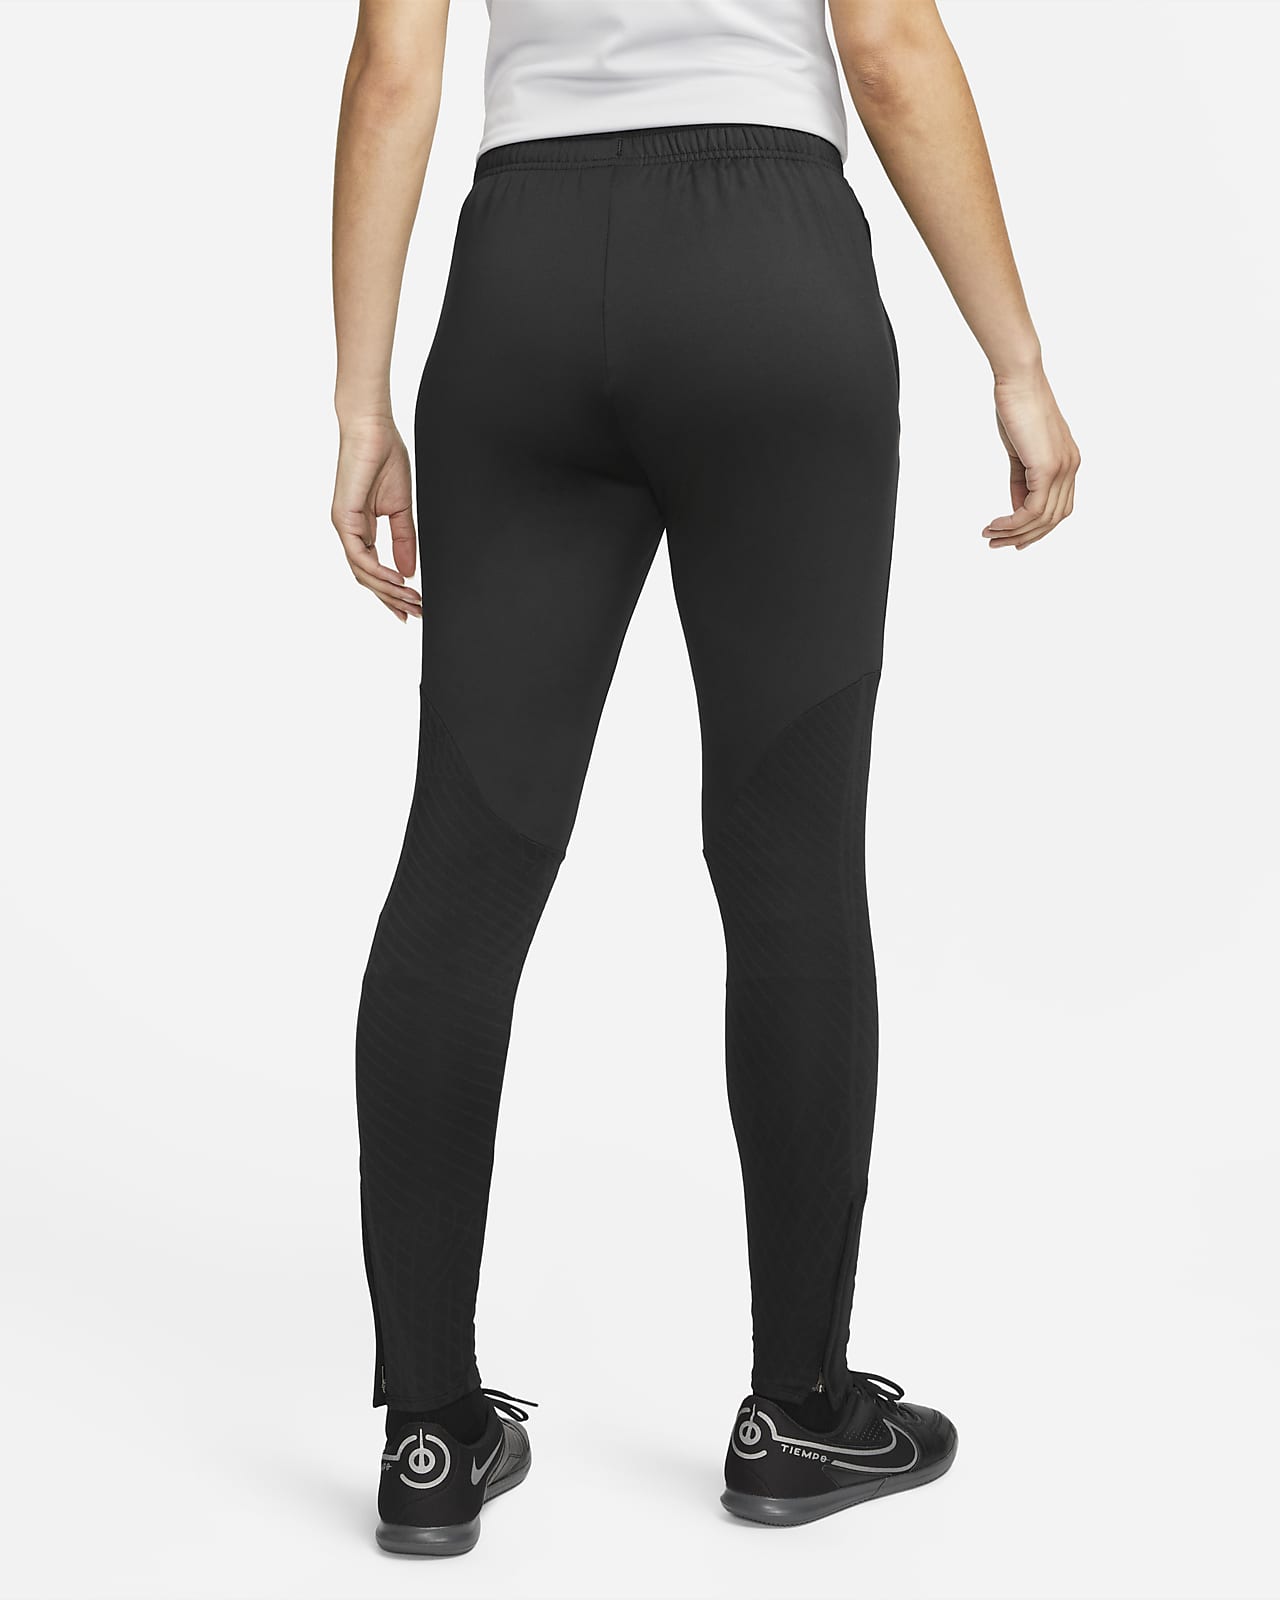 Blue Nike Dri FIT Strike Track Pants Womens - Get The Label